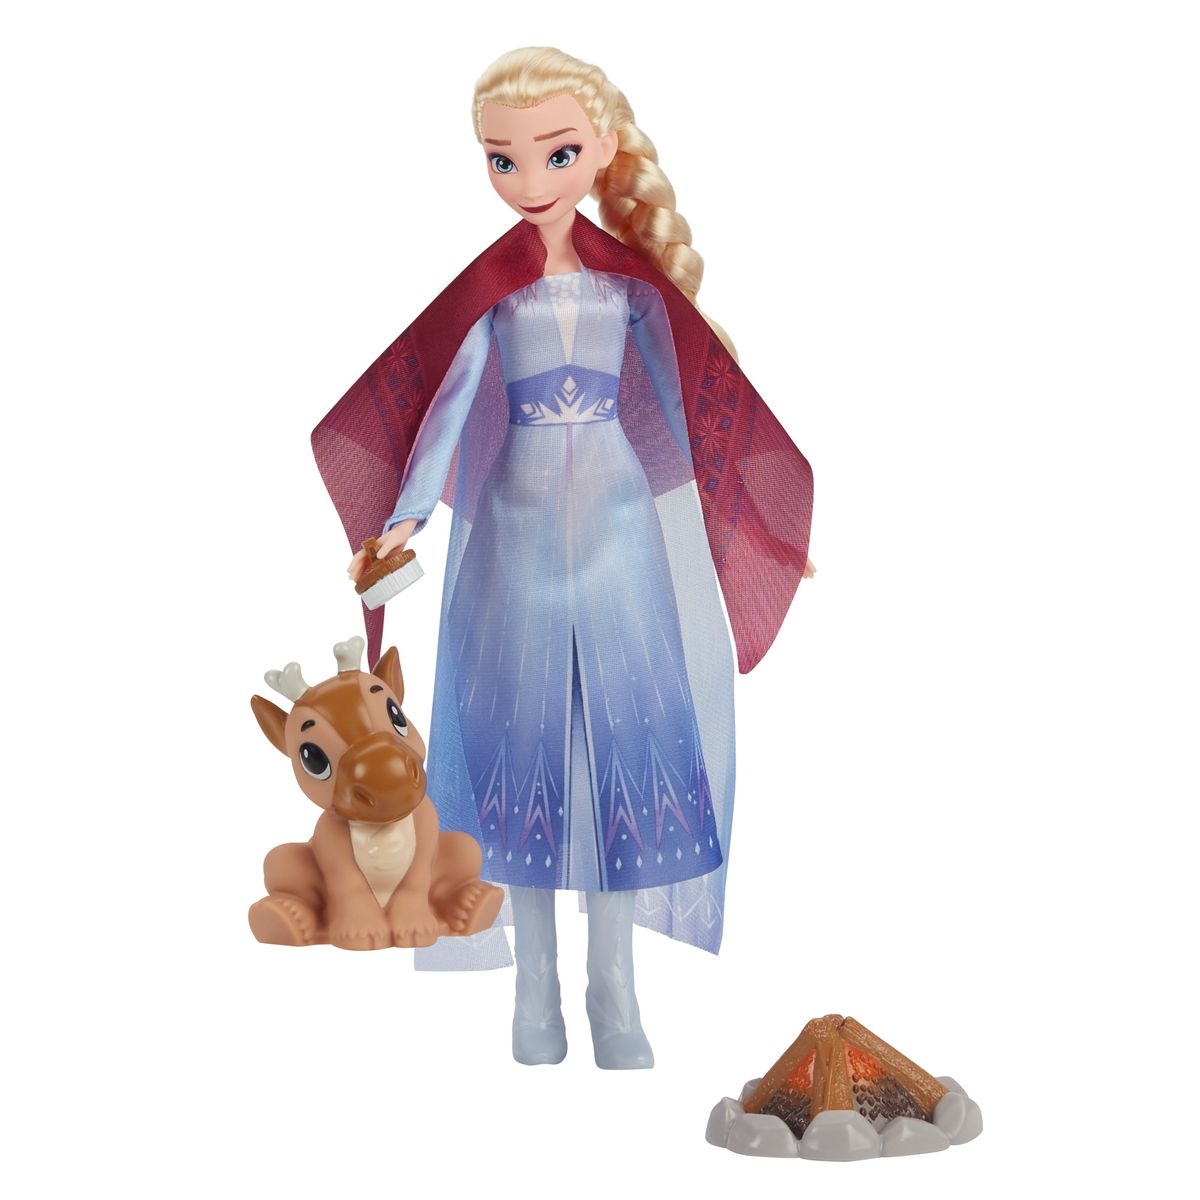 [RDY] [] Disney Disney's Frozen 2 Elsa\'s Campfire Friend, Includes Reindeer and Accessories [yVCOʔ] | Disney\'s Frozen 2 Elsa\'s Campfire Friend, Includes Reindeer and Accessories